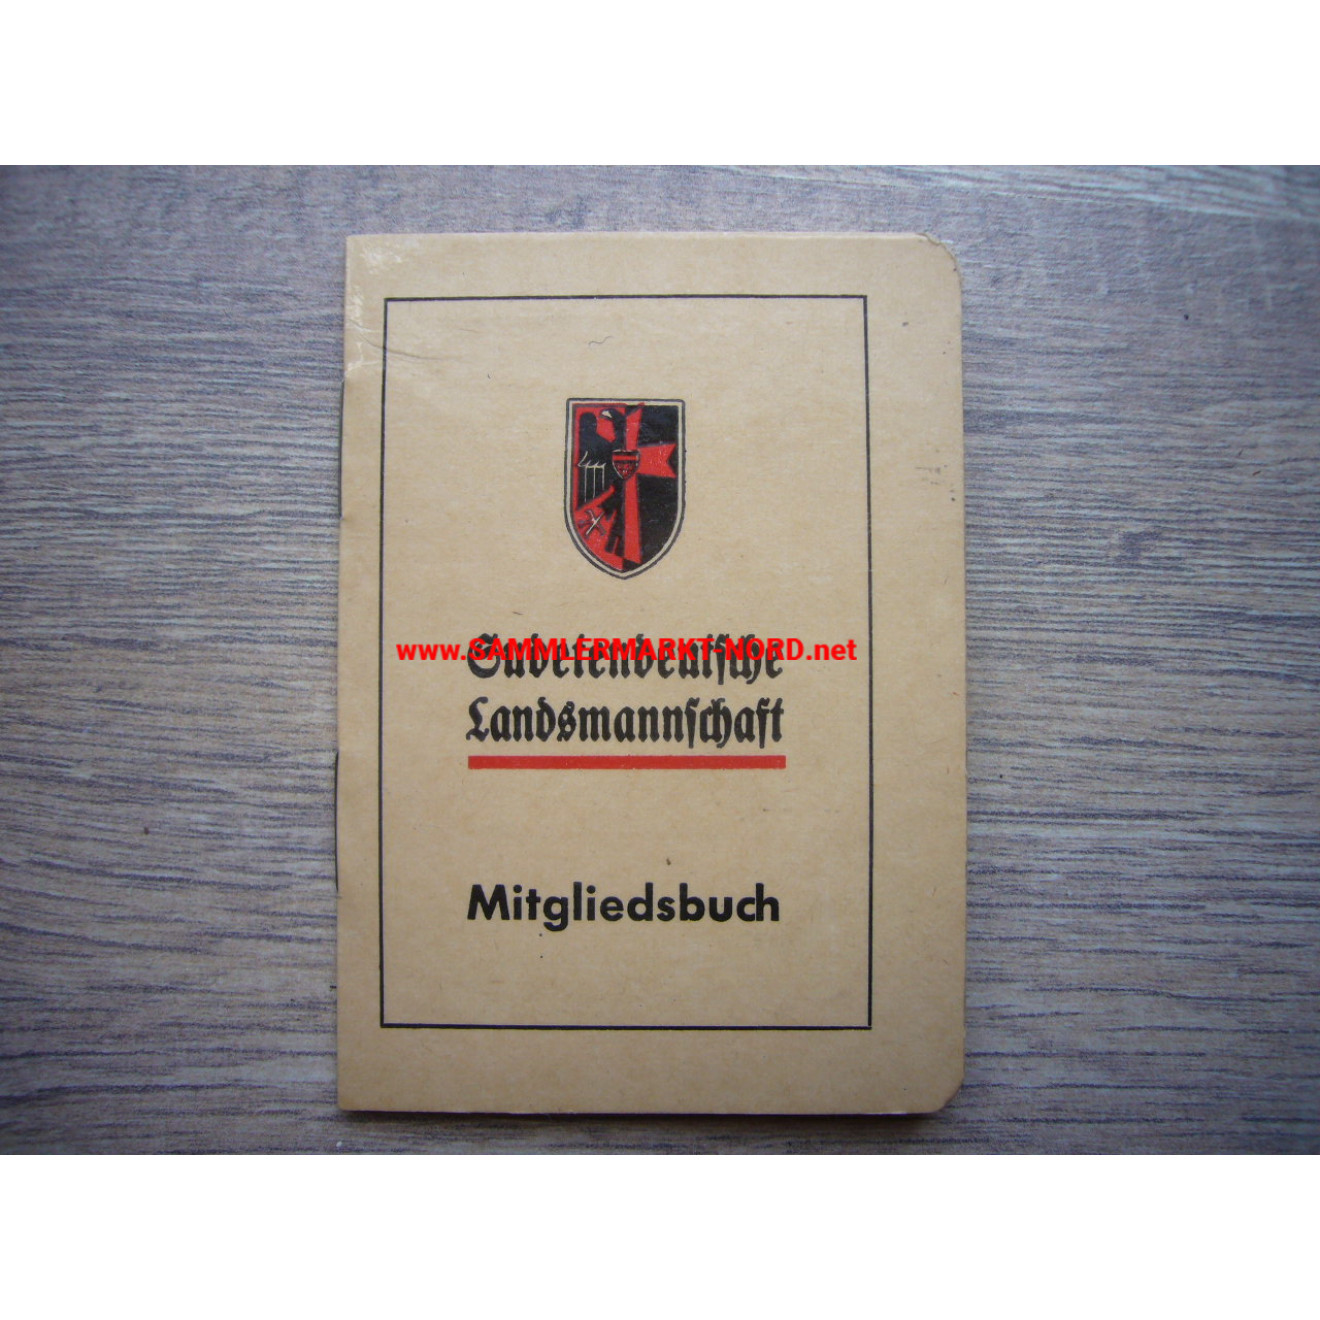 Sudetendeutsche Landsmannschaft - membership